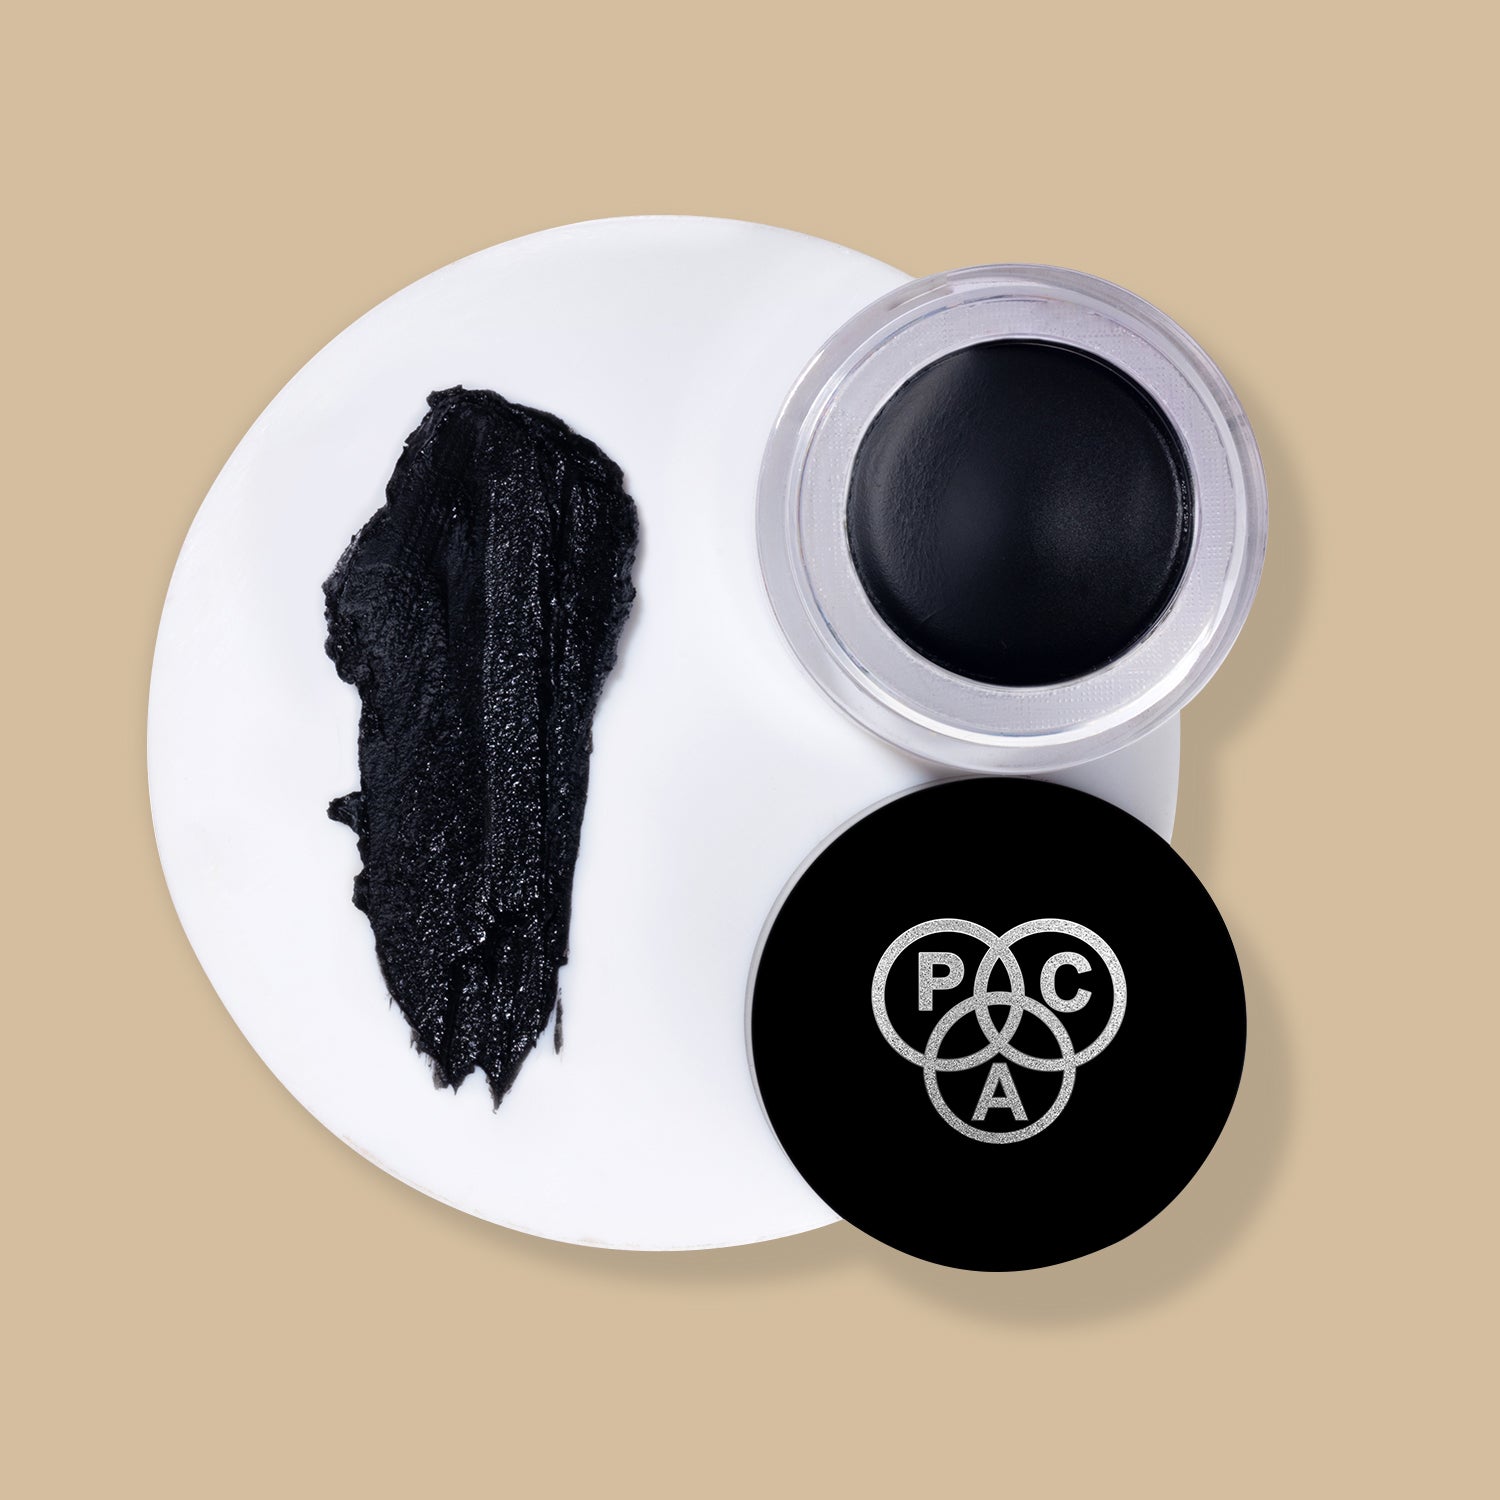 PAC Cosmetics Spotlight Gel Liner (5.5 gm) #Color_Black